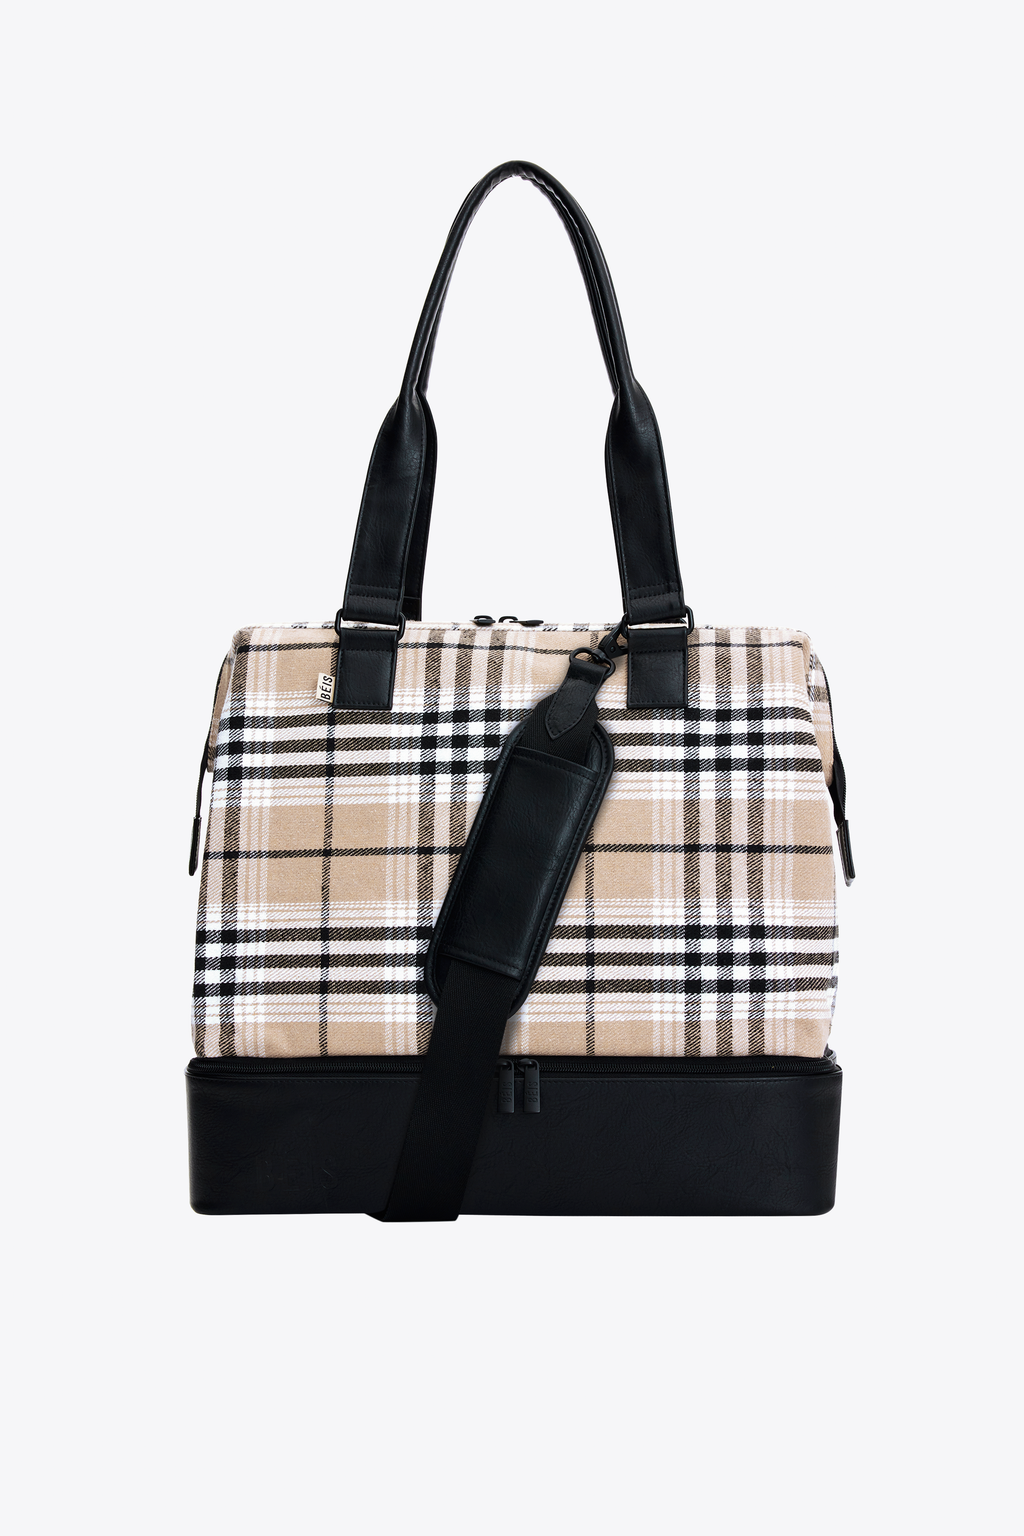 BÉIS 'The Mini Weekender' in Plaid - Small Plaid Duffle Bag